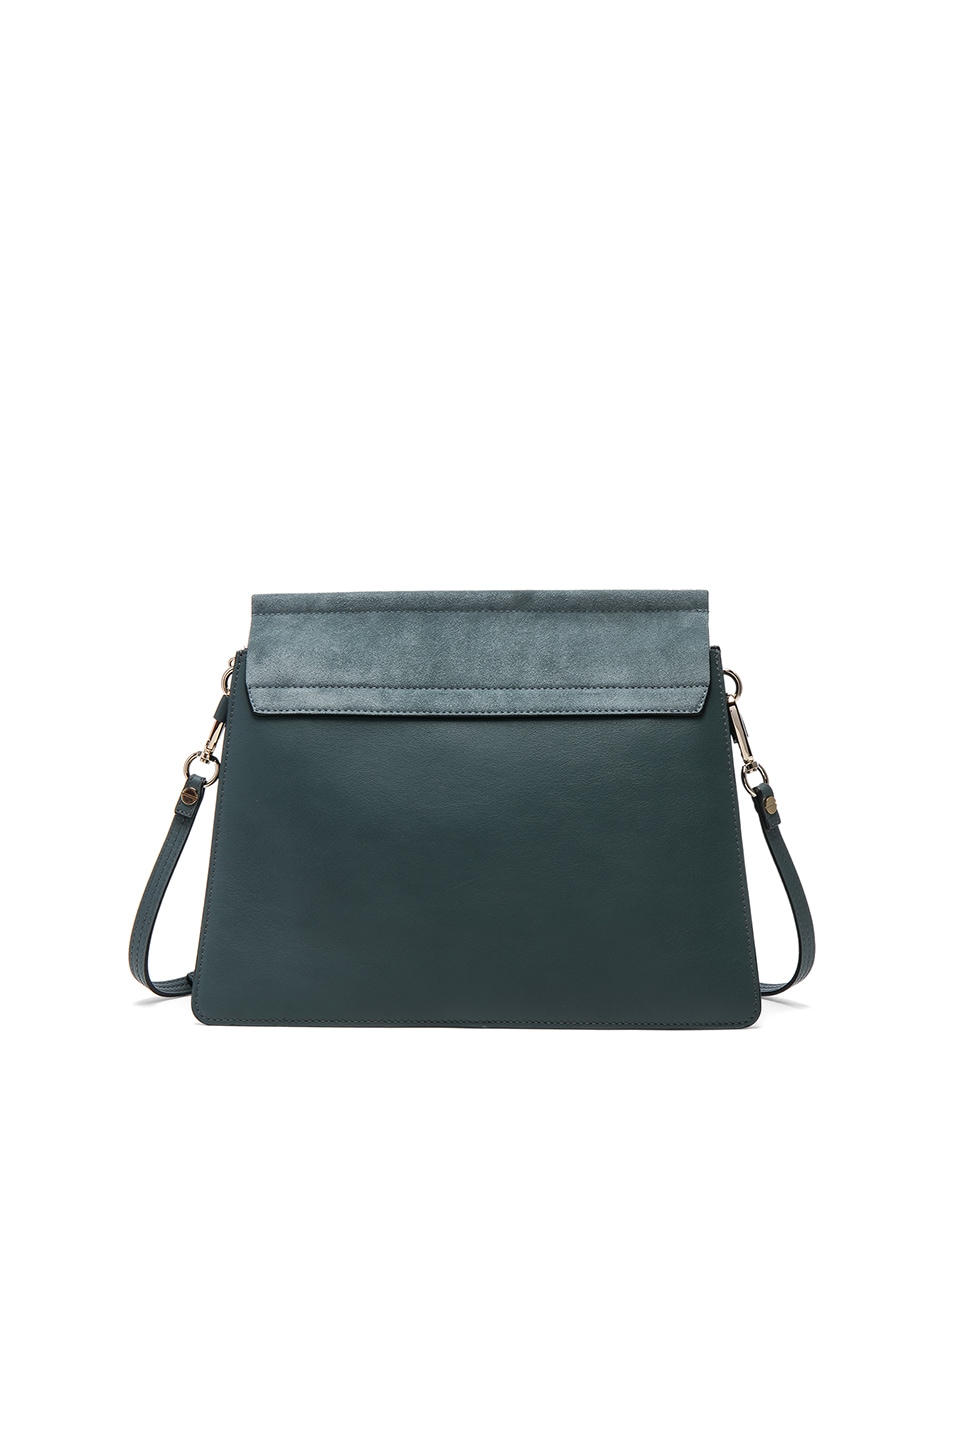 CHLOÉ Medium Leather Faye Bag, Cloudy Blue | ModeSens